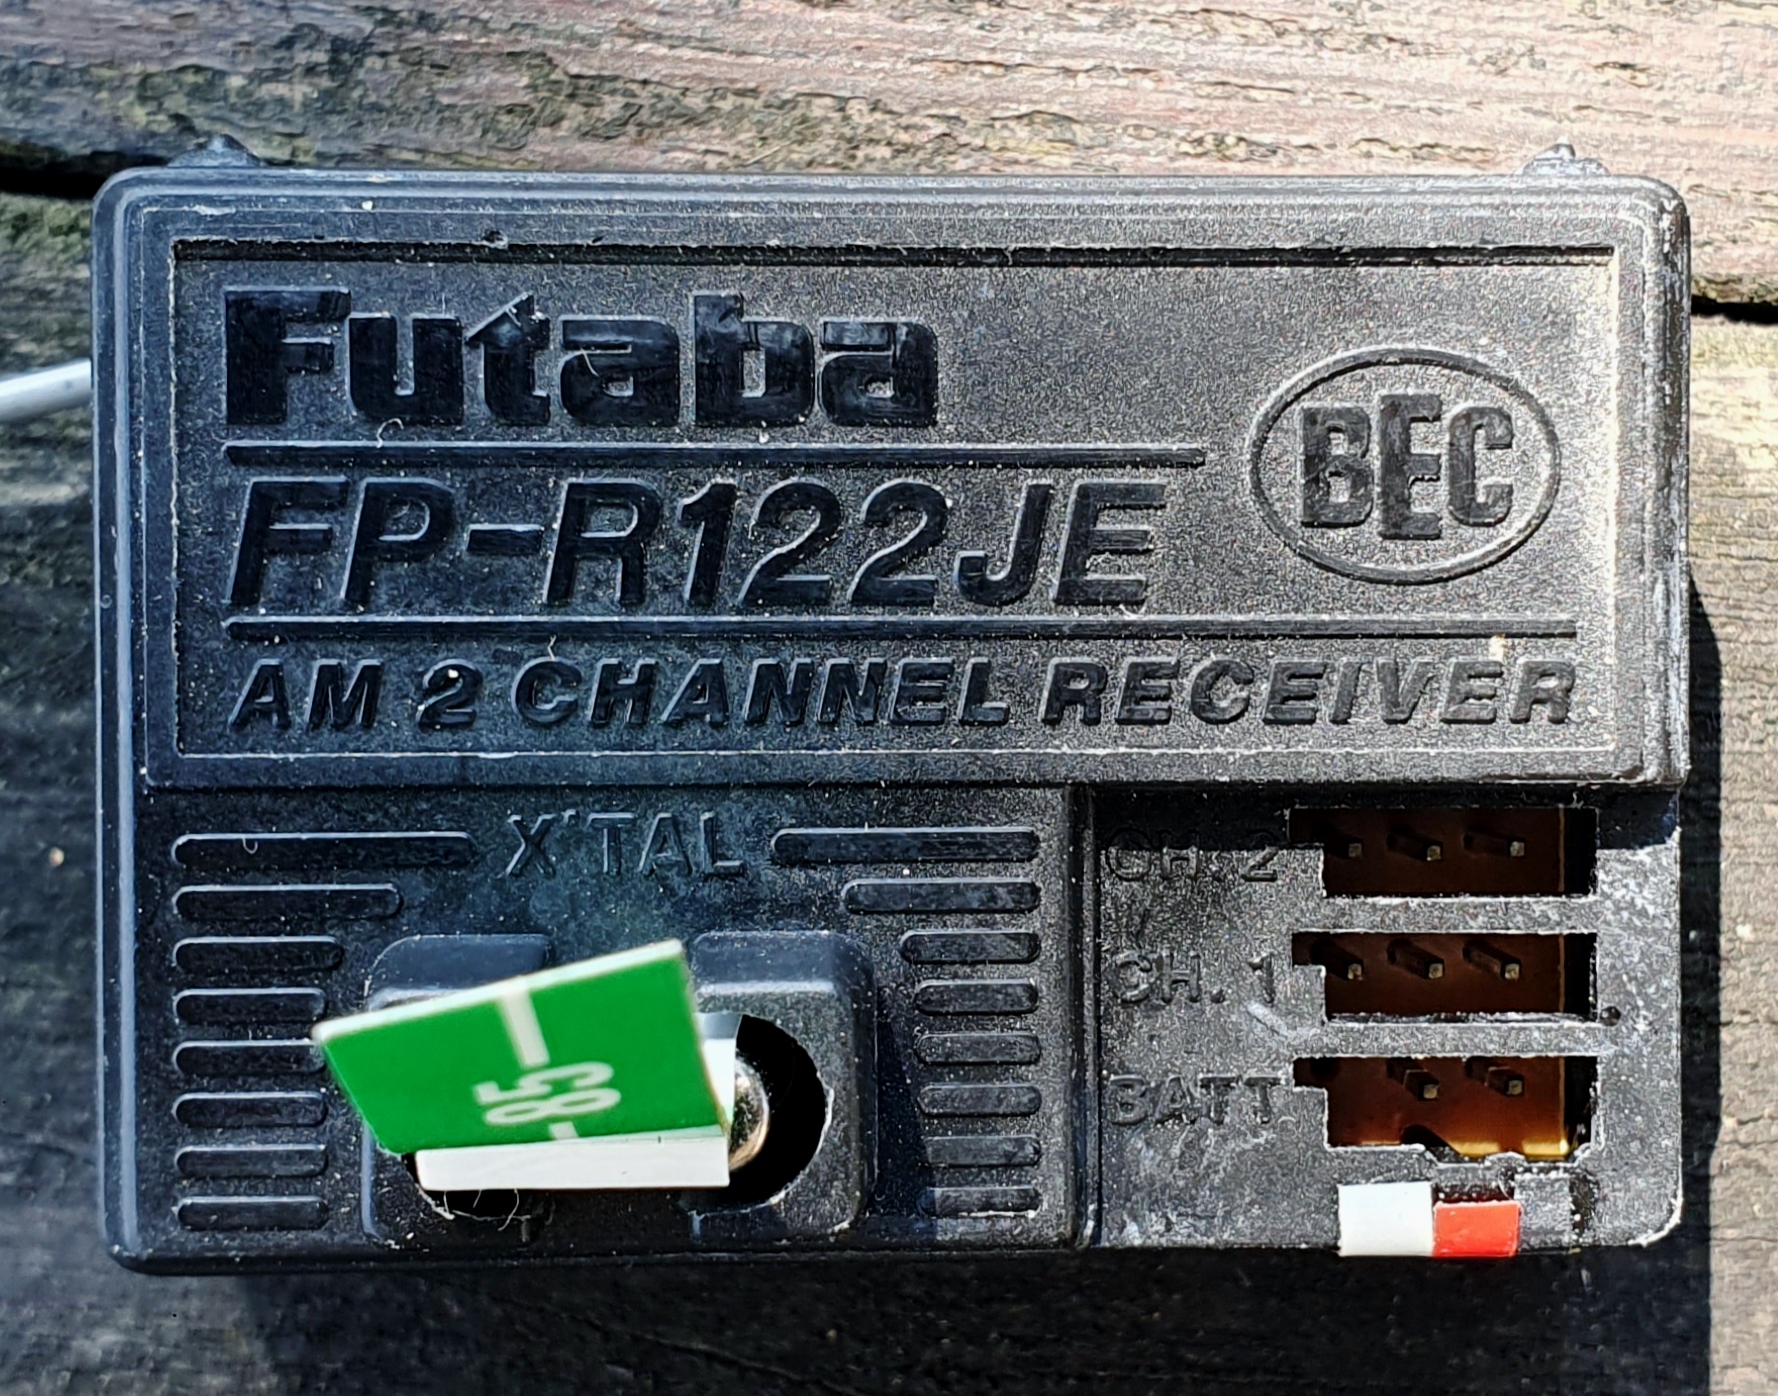 2 channel receiver